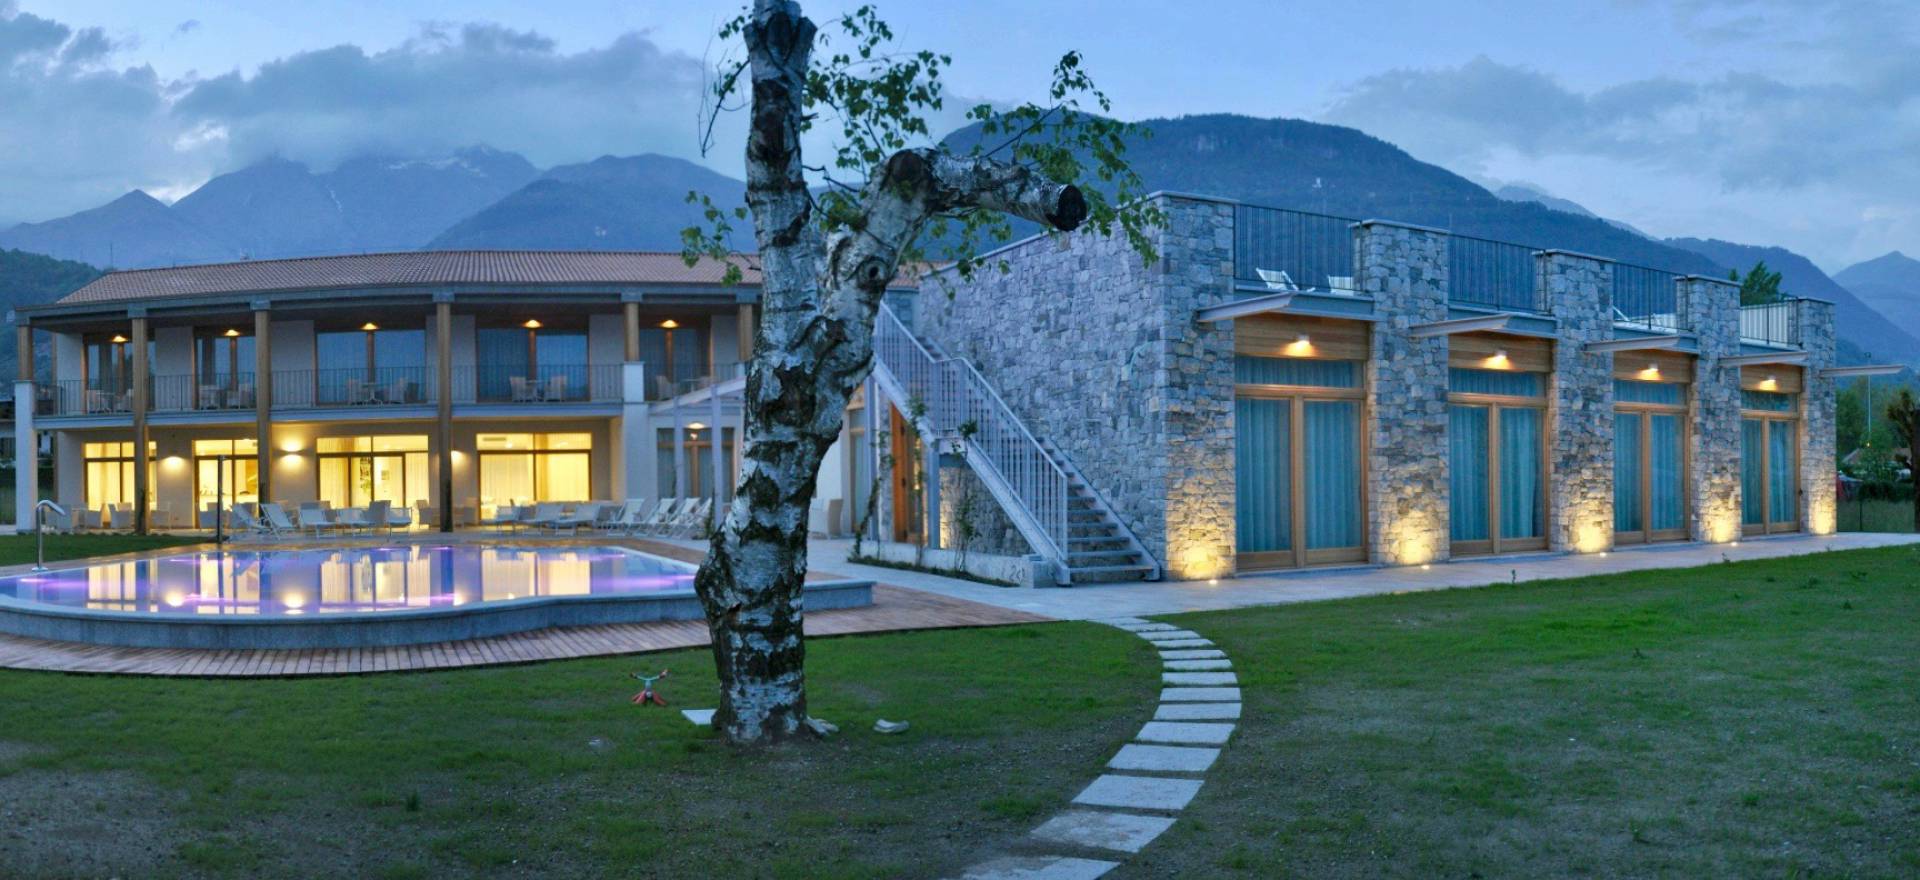 Agriturismo Lake Como and Lake Garda Small country hotel in wonderful location on Lake Como